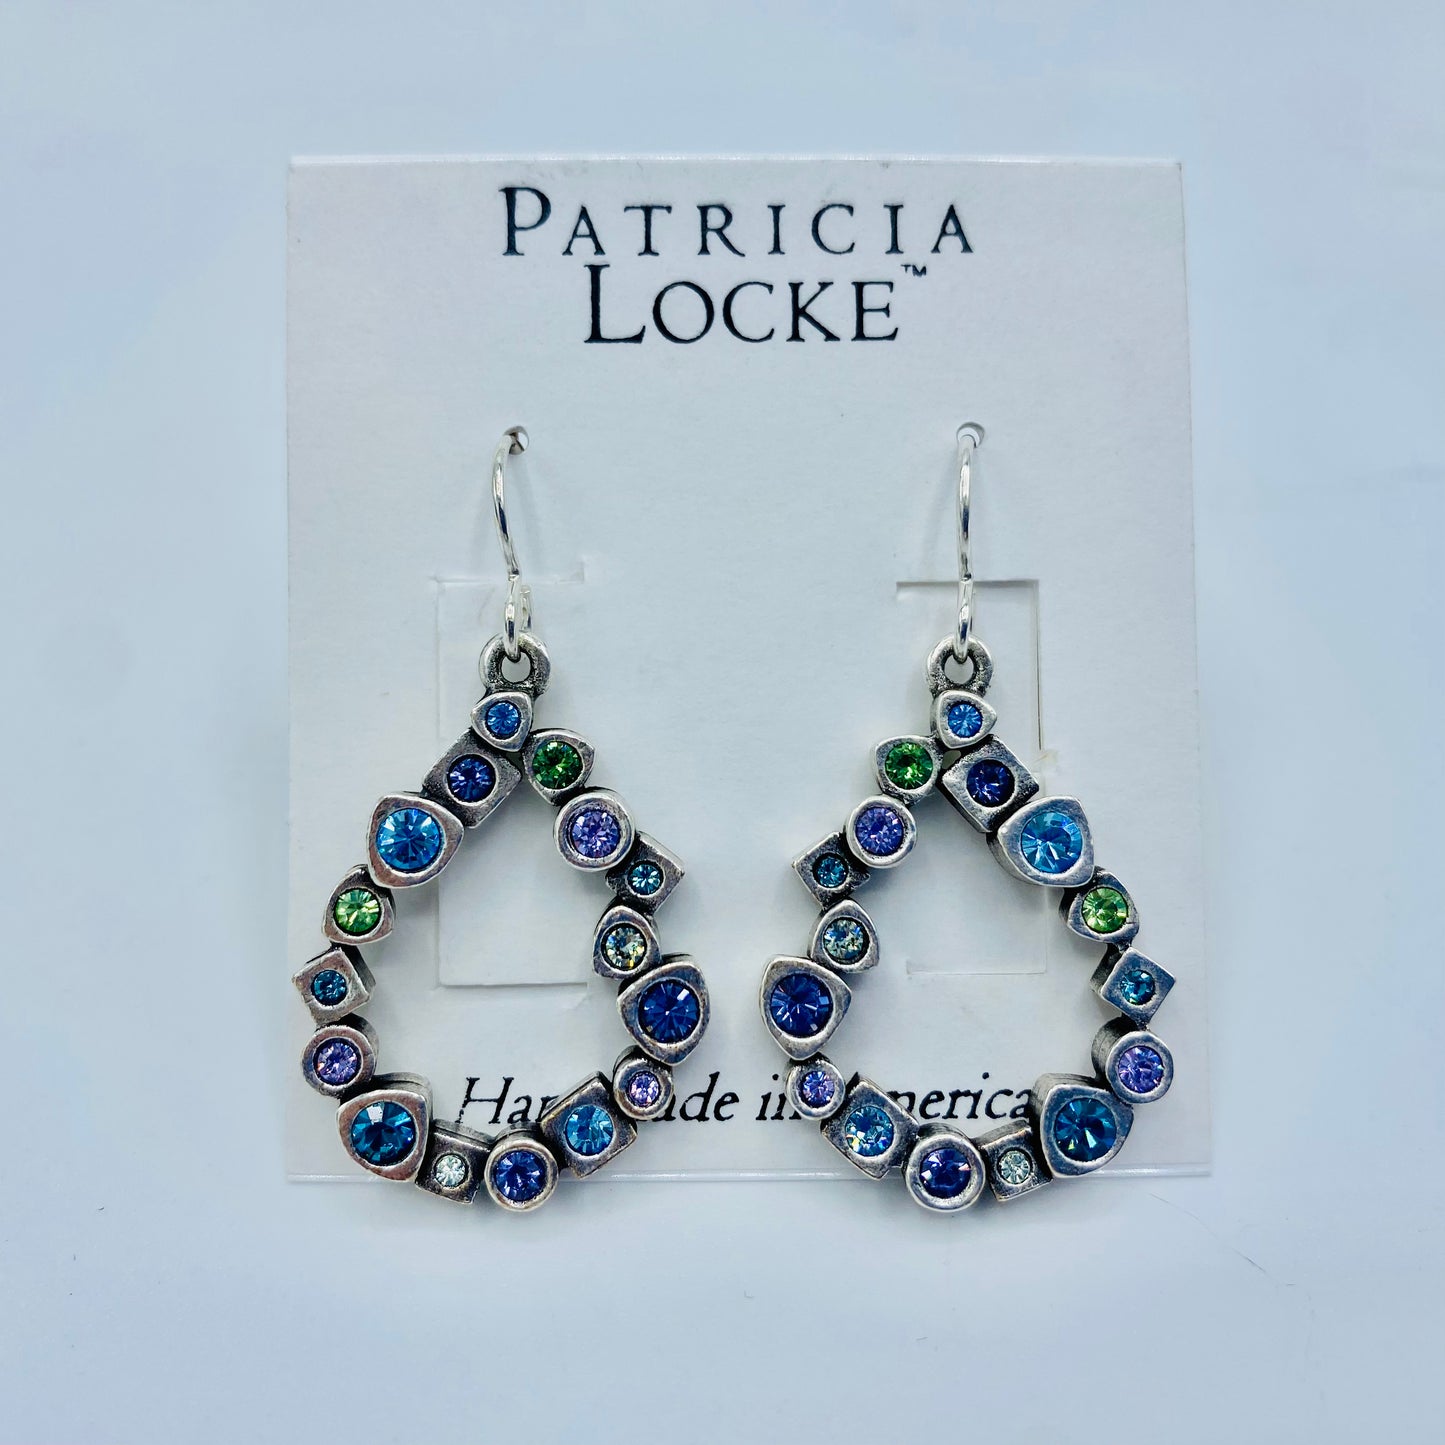 Patricia Locke - Honeypot Earrings - Waterlily